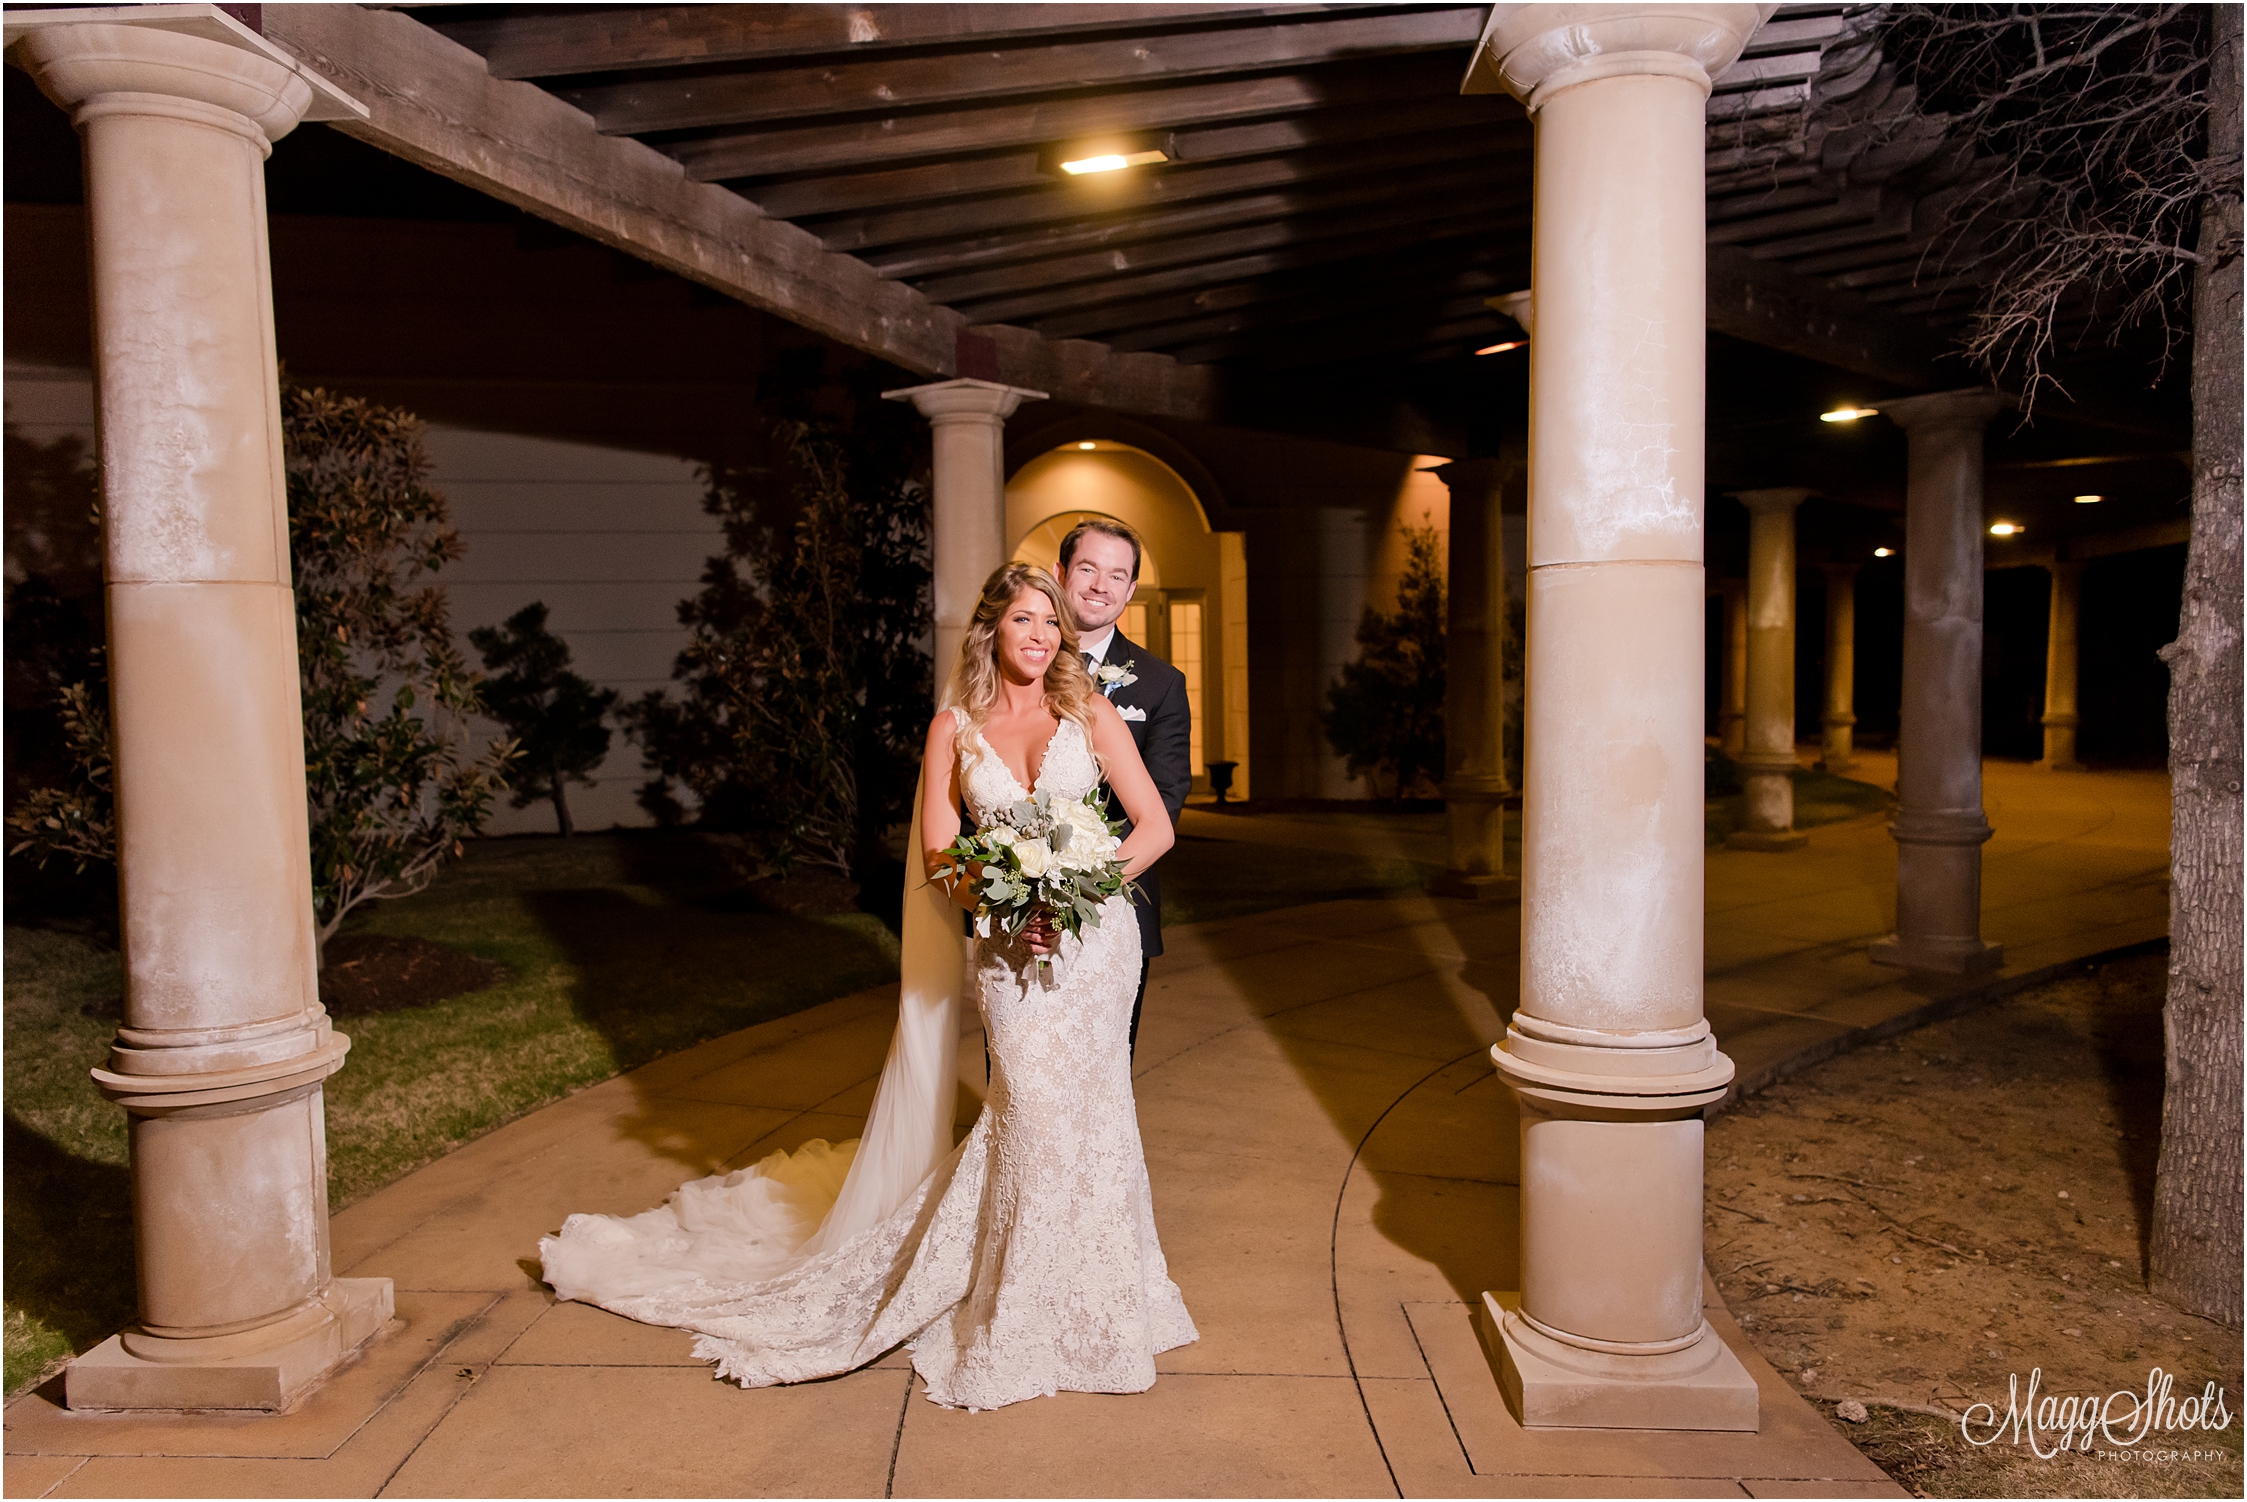 Ashton Gardens, Wedding, Invitations, Love, Bride & Groom, I Do, Dallas Wedding Photographer, DFW Wedding Photographer, MaggShots Photography, MaggShots, 